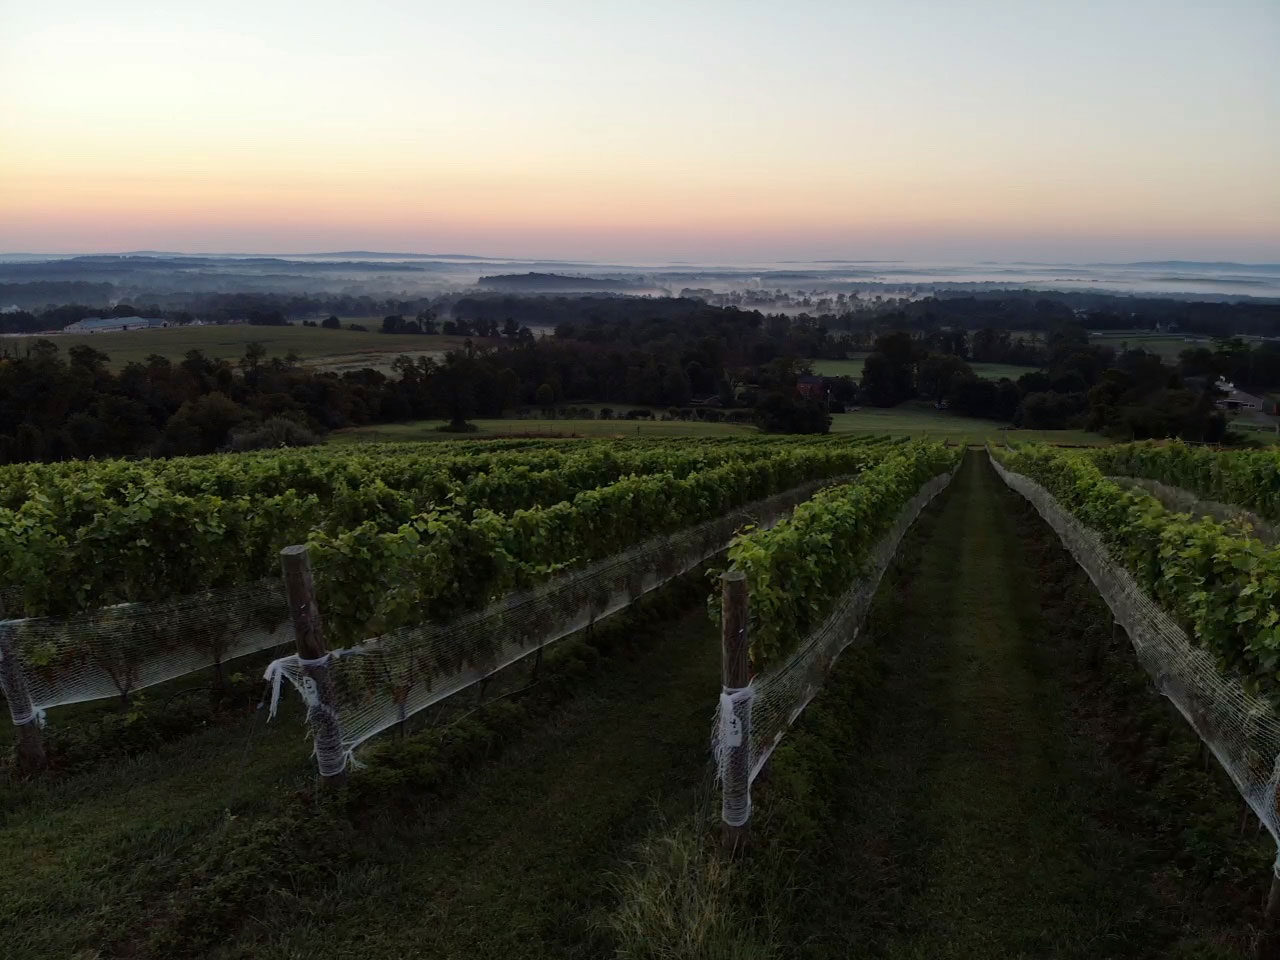 Sunrise at October One Vineyards